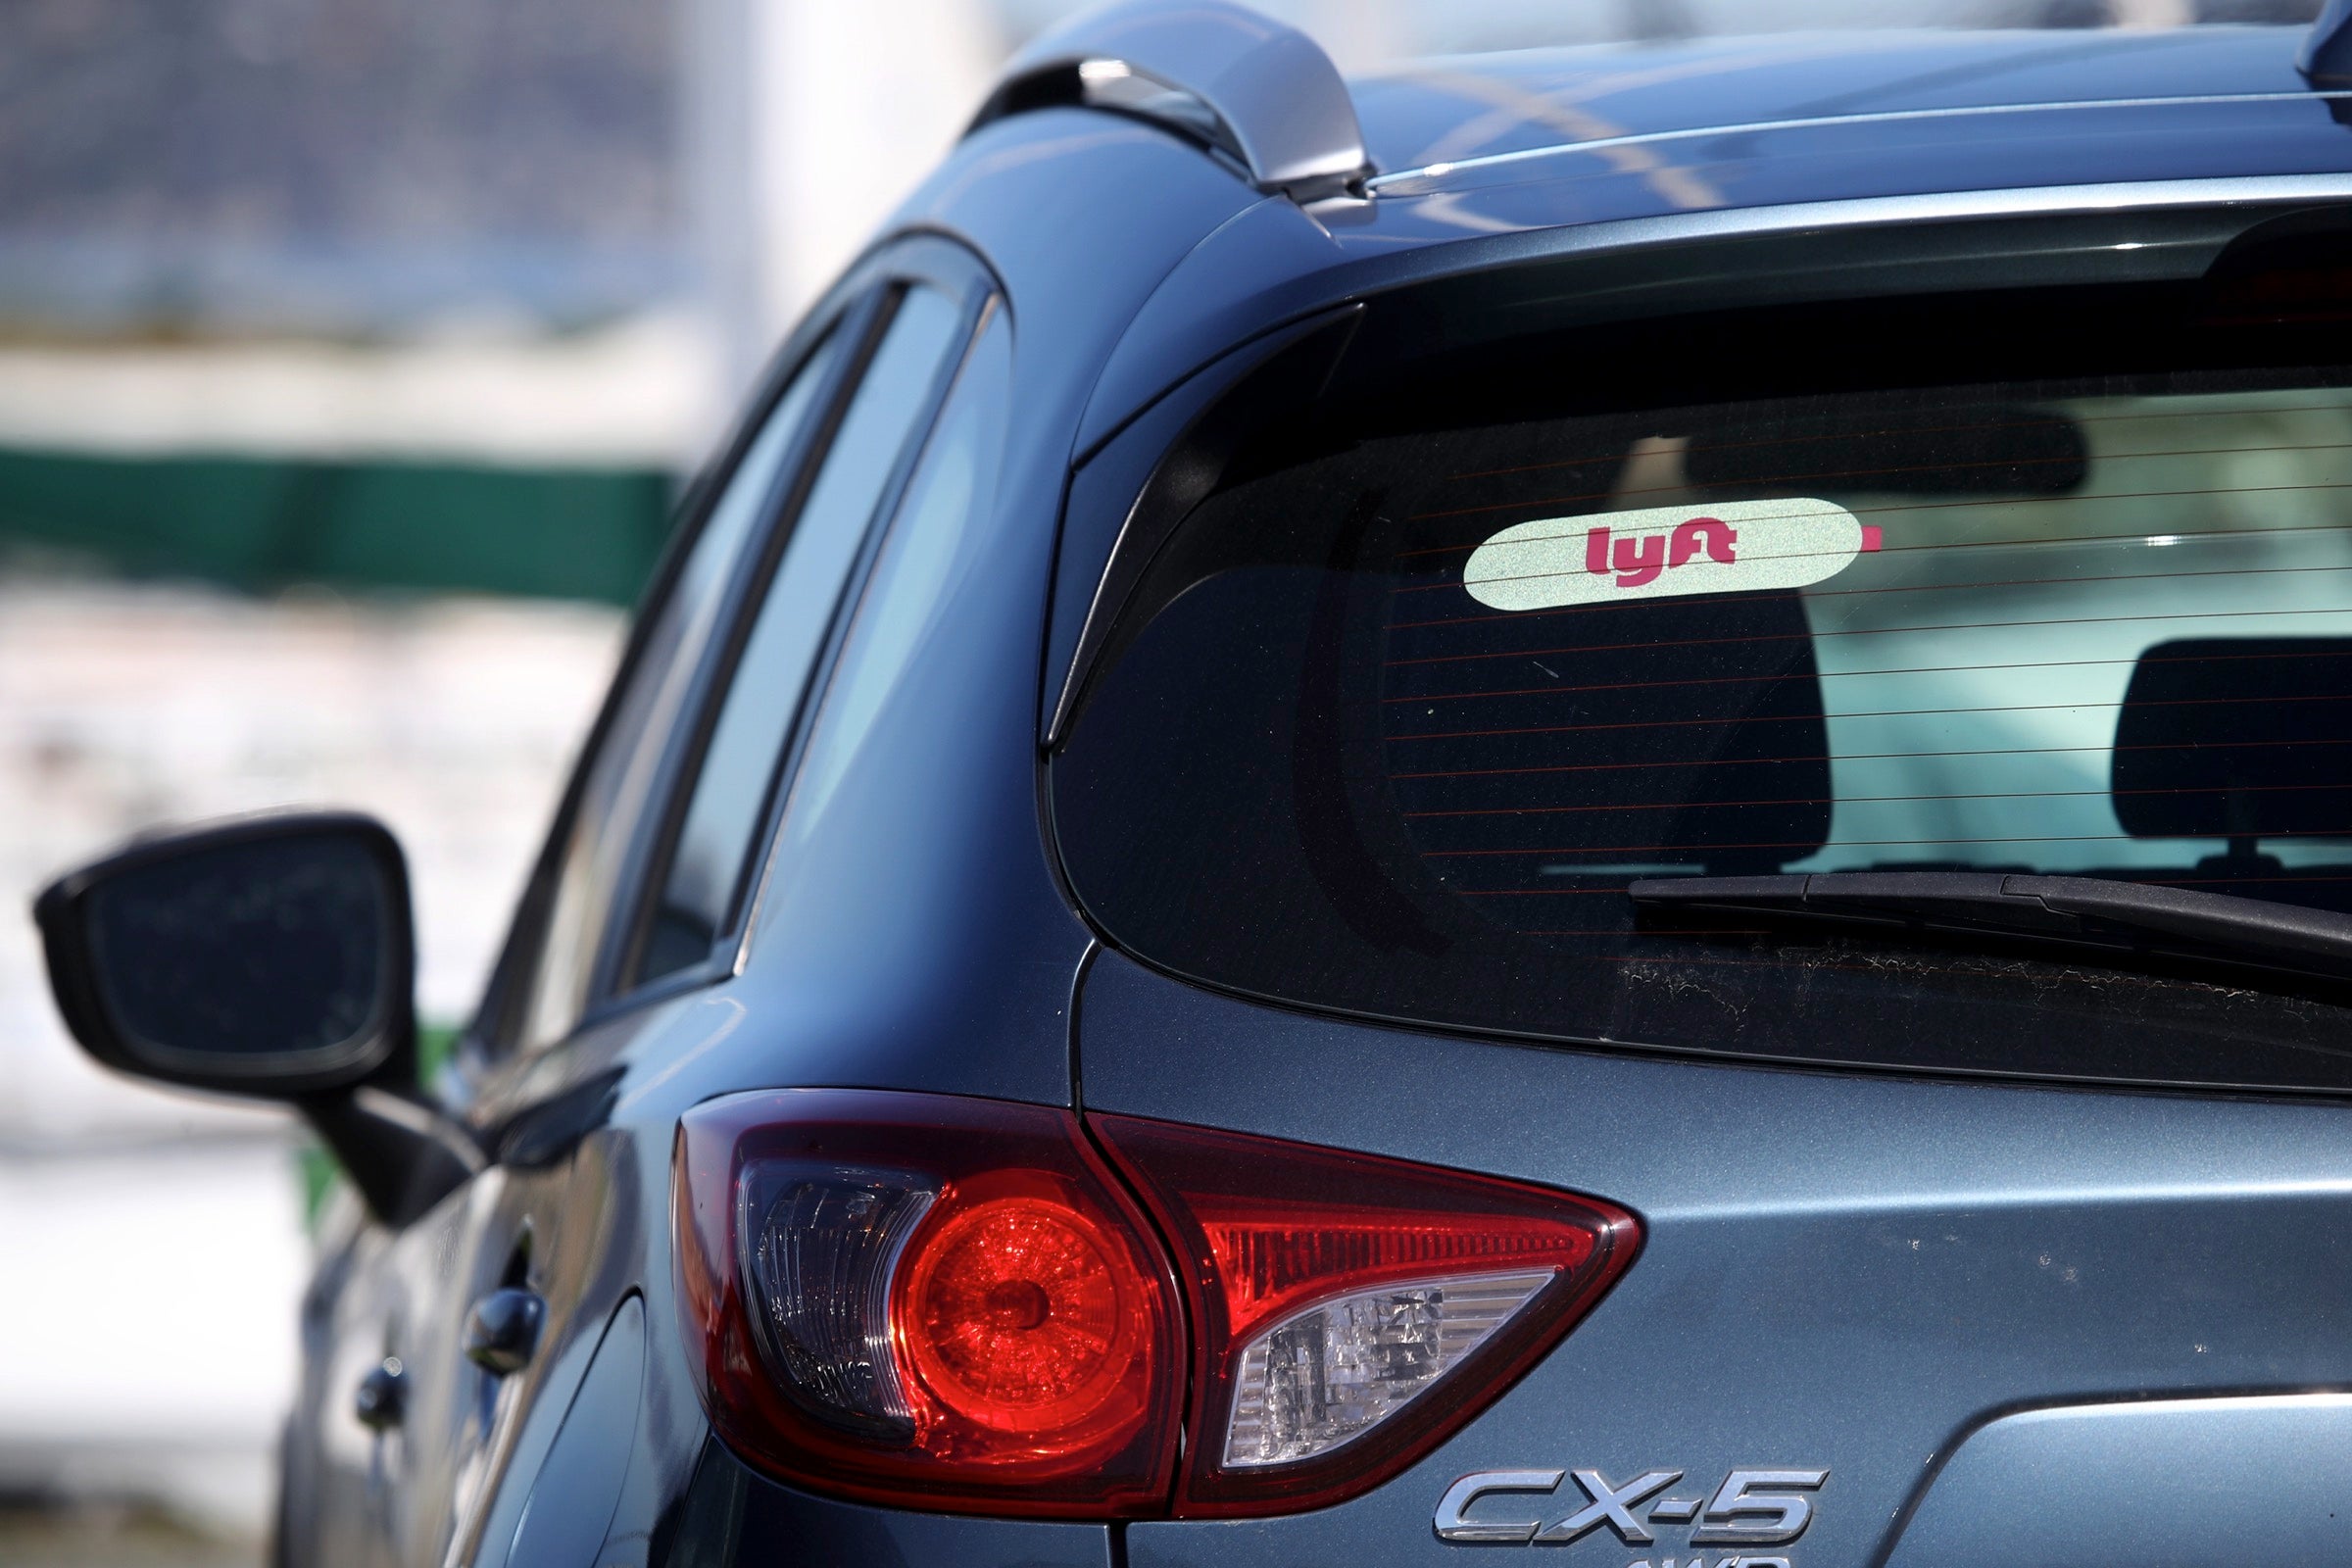 Car with a Lyft sticker in the rear windshield